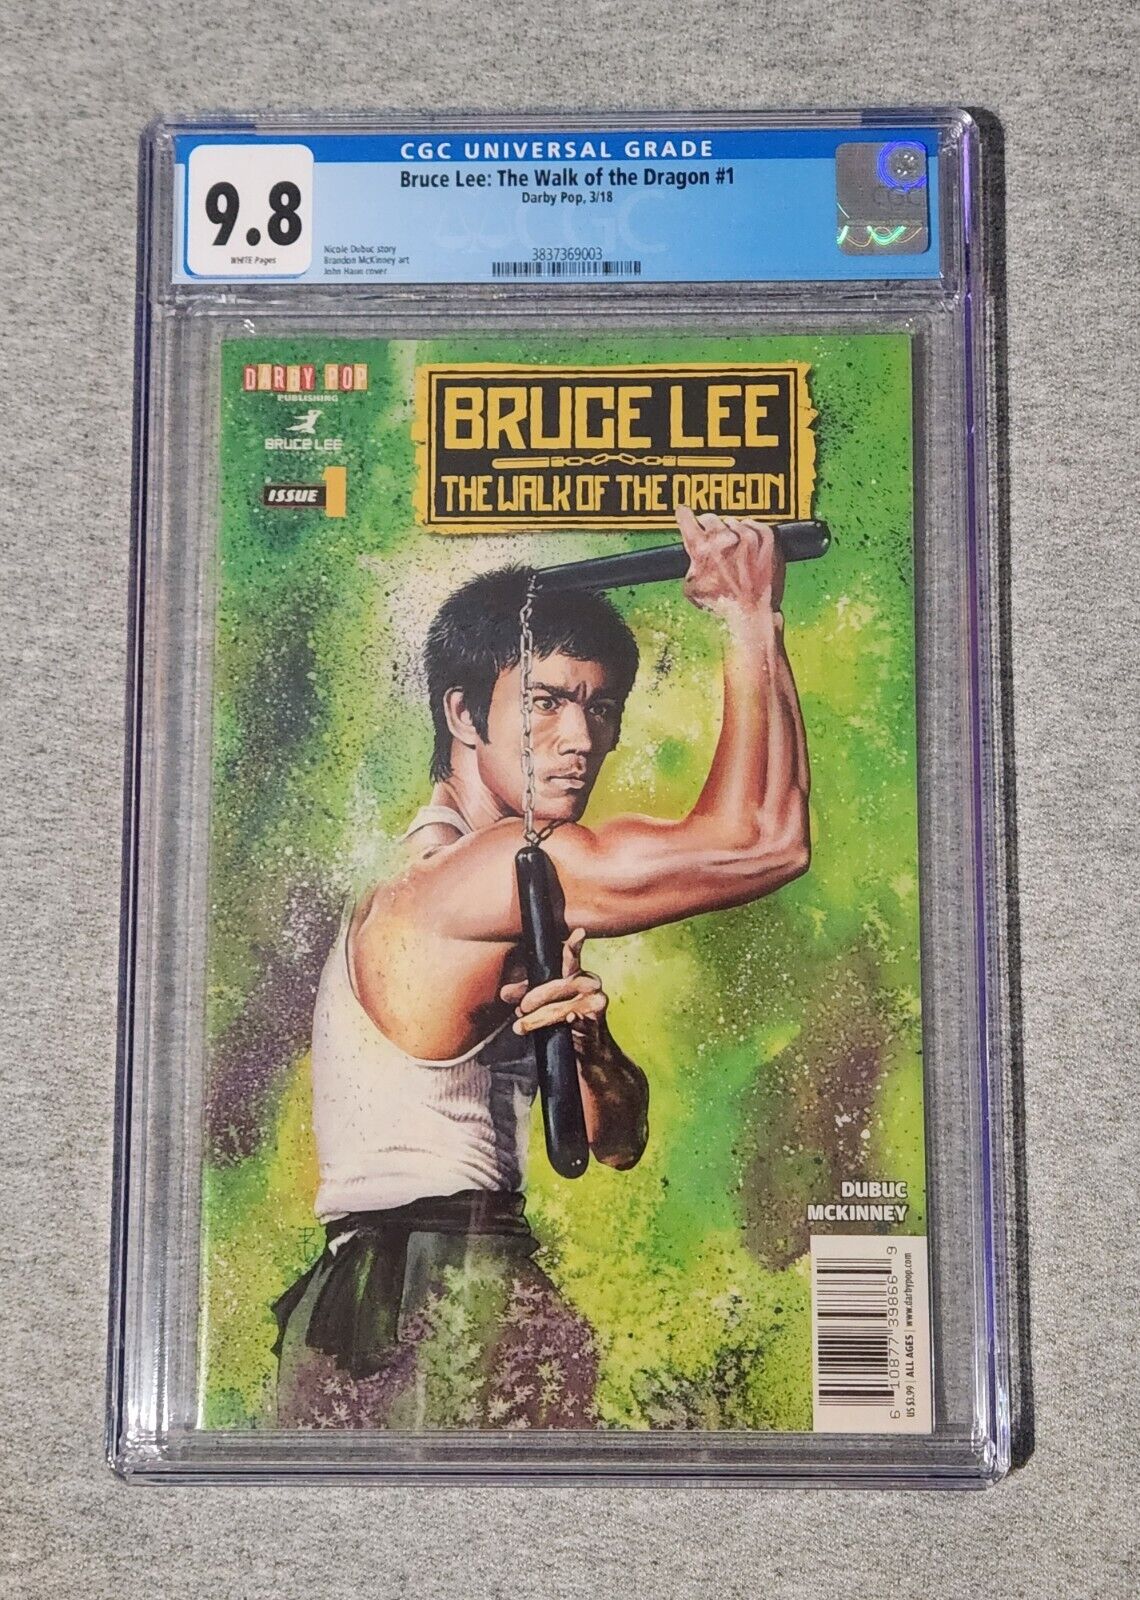 Bruce Lee Walk of the Dragon #1 CGC 9.8 Darby Pop Rare